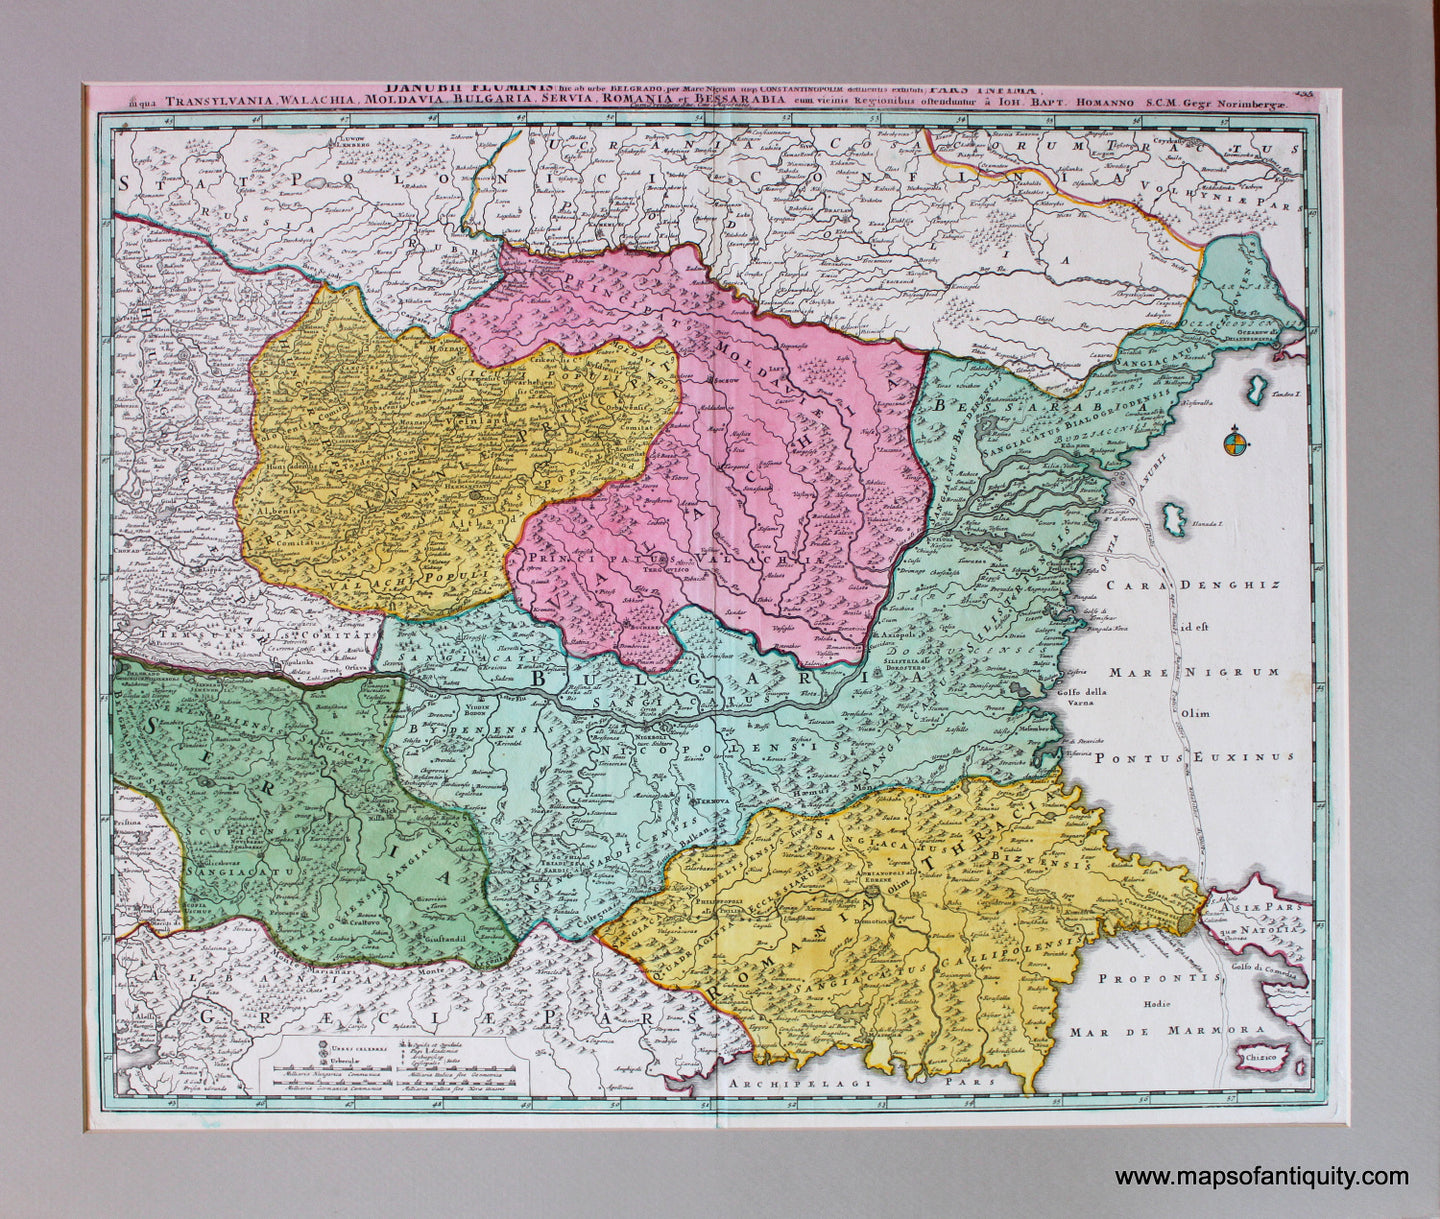 Antique-Hand-Colored-Map-Danubii-Fluminis-hic-ab-arbe-Belgrado-per-Mare-NegrumÃ¢â‚¬Â¦in-qua-Transylvania-Walachia-Moldavia-Bulgaria-Servia-Romania-et-Bessarabia-cum-vicinis-Regionibus-ostenduntur-a-Joh.-Bapt.-Homanno-**********-Europe-Balkans-c.-1720-Homann-Maps-Of-Antiquity